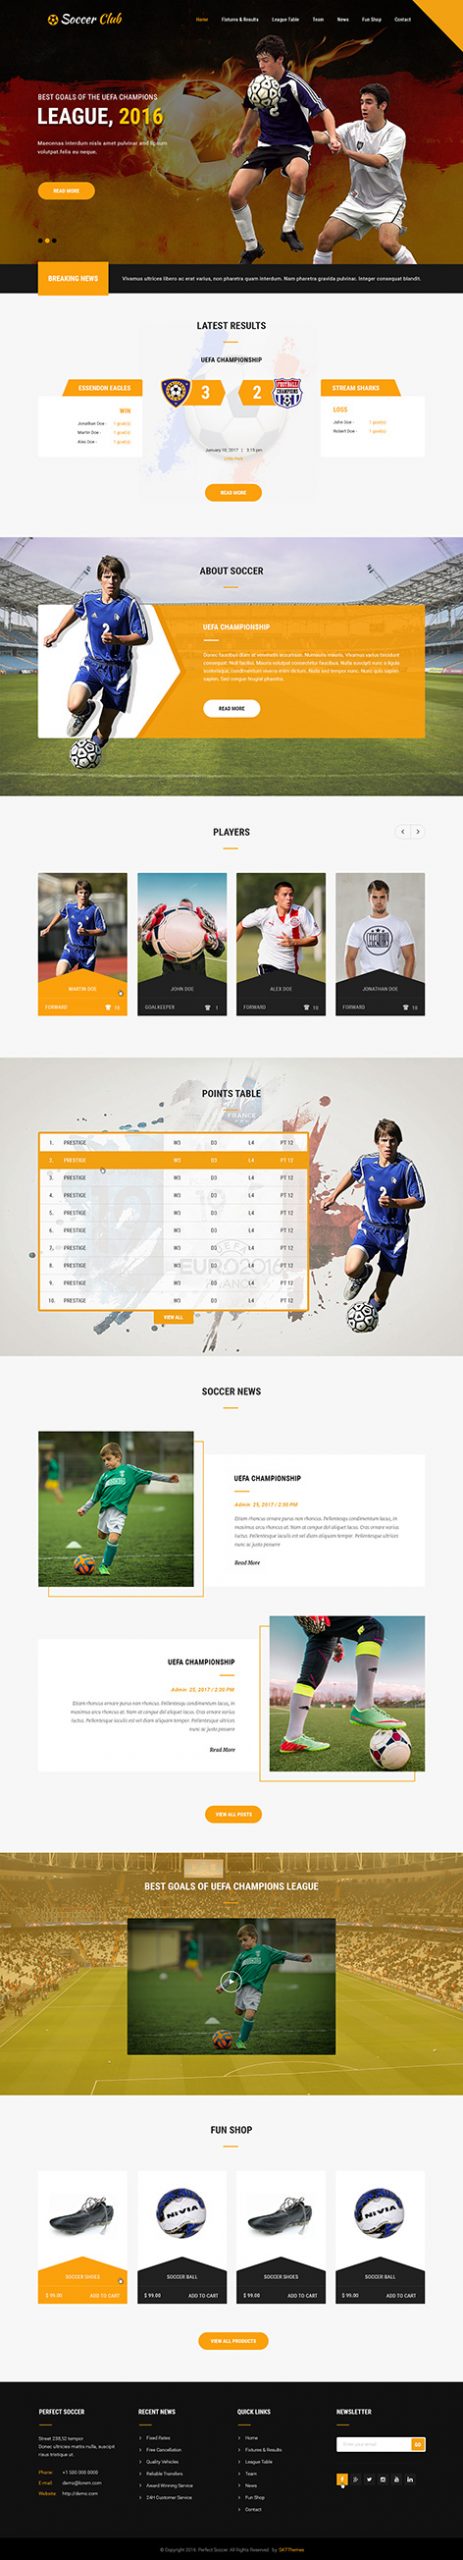 soccer sports wordpress theme1 scaled